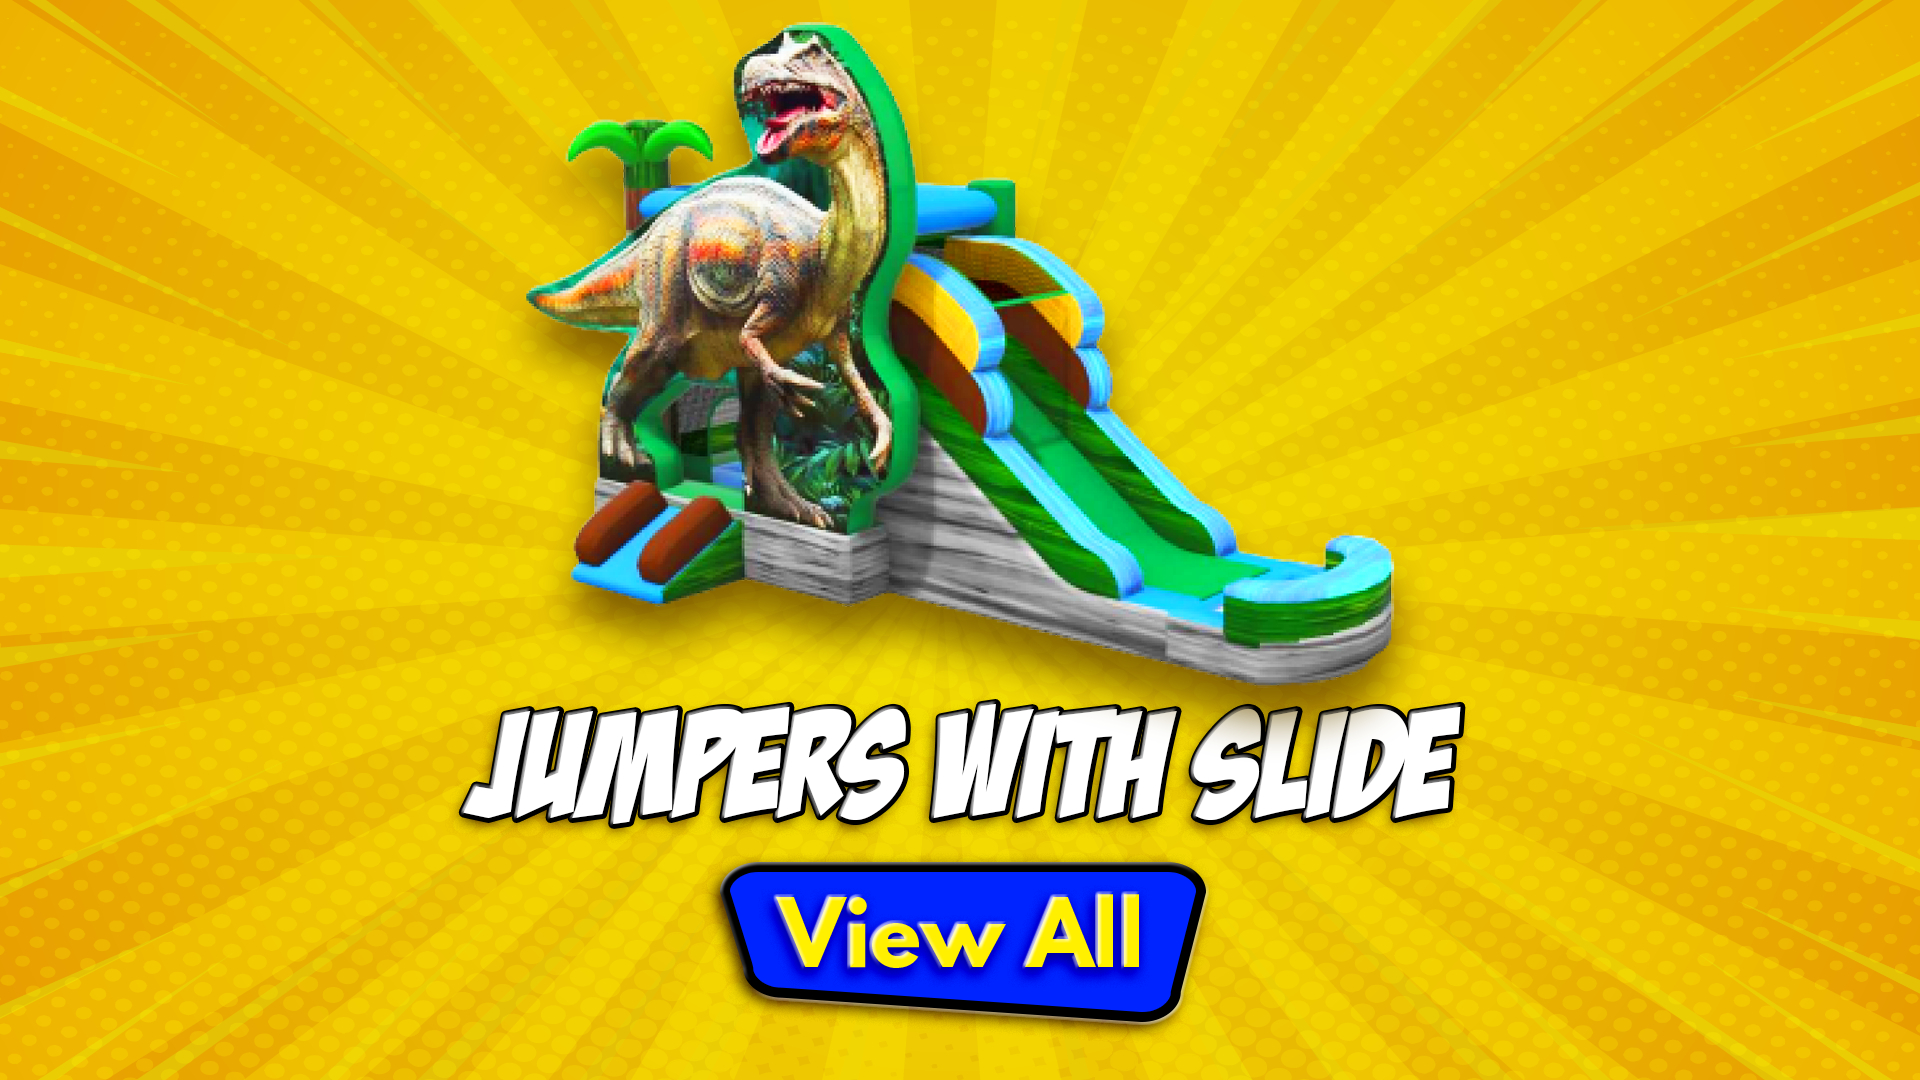 Jumper with slide rentals in Menlo Park